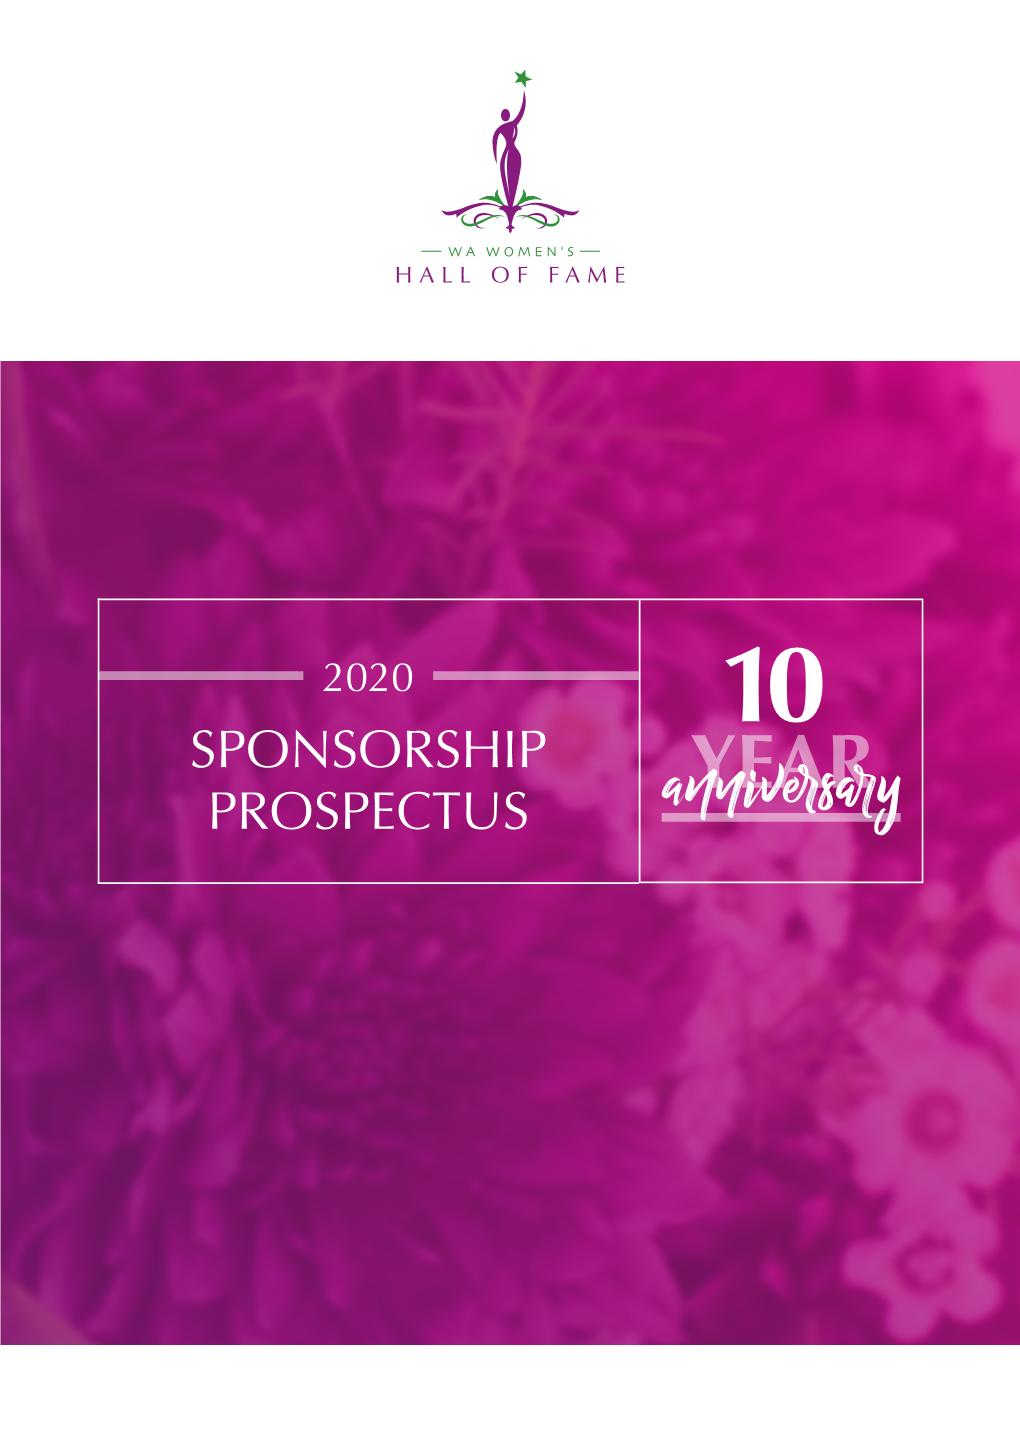 Sponsorship Prospectus Wa Women’S Hall of Fame 2020 Sponsorship Prospectus